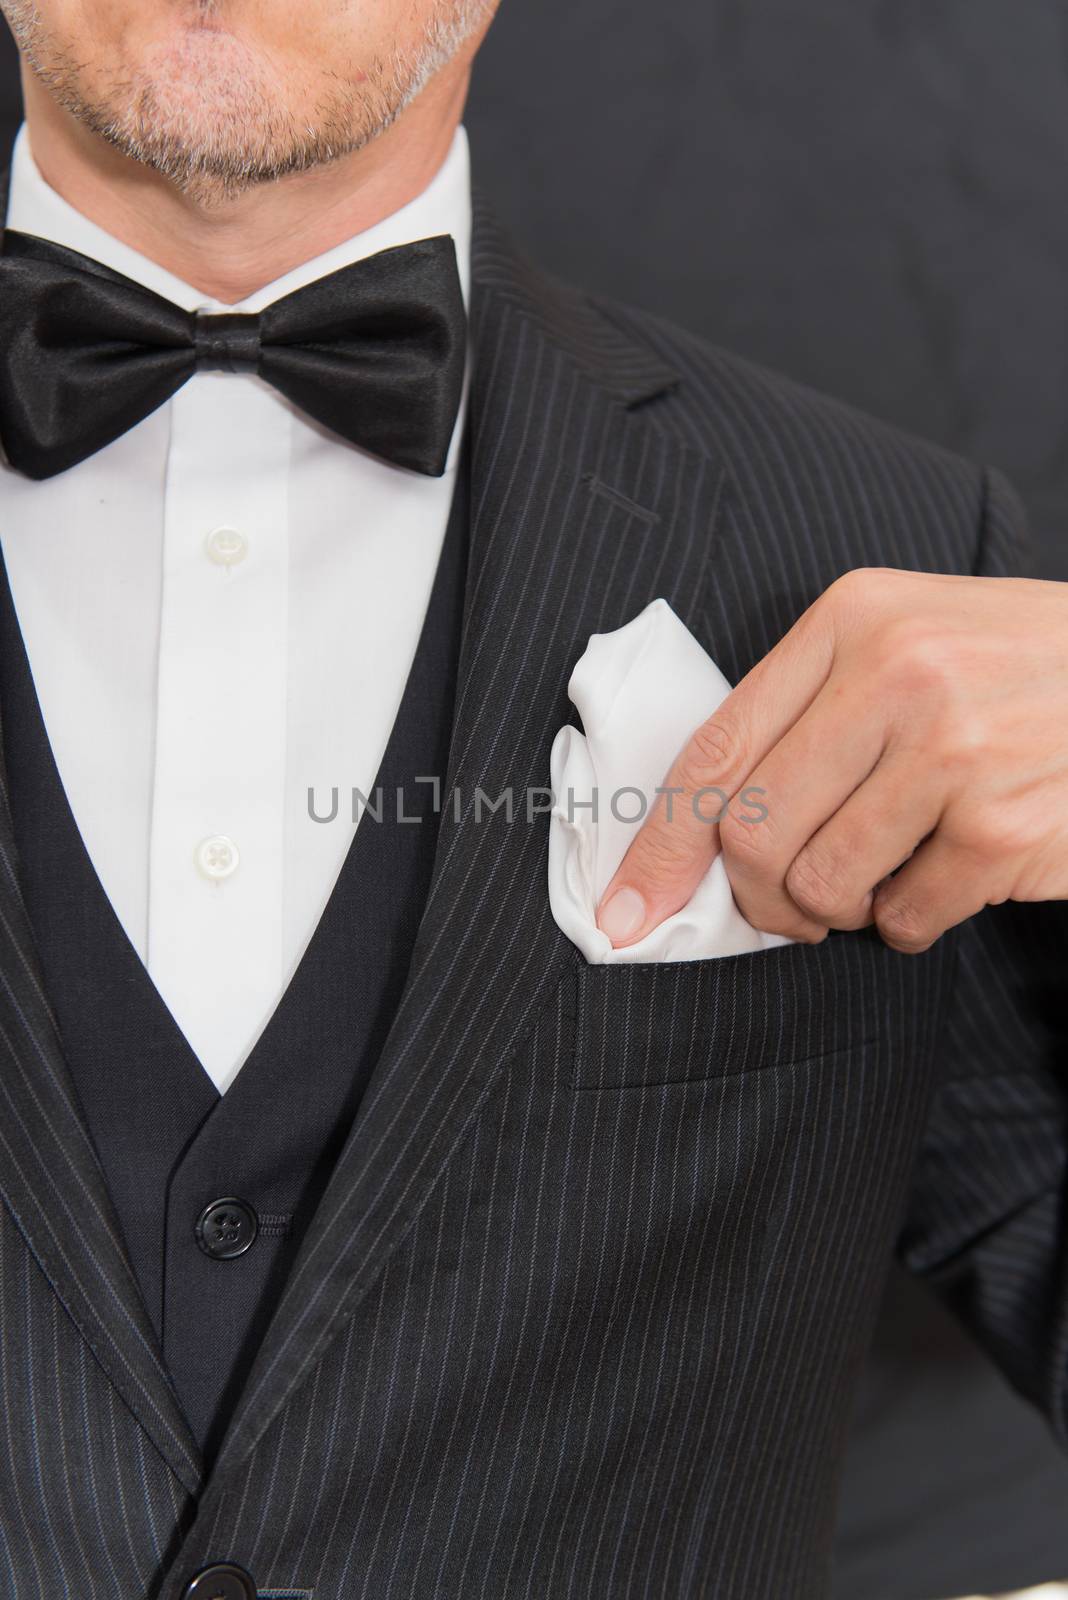 Gentleman In Black Tie Fixes Pocket Square, Vertical by jackethead